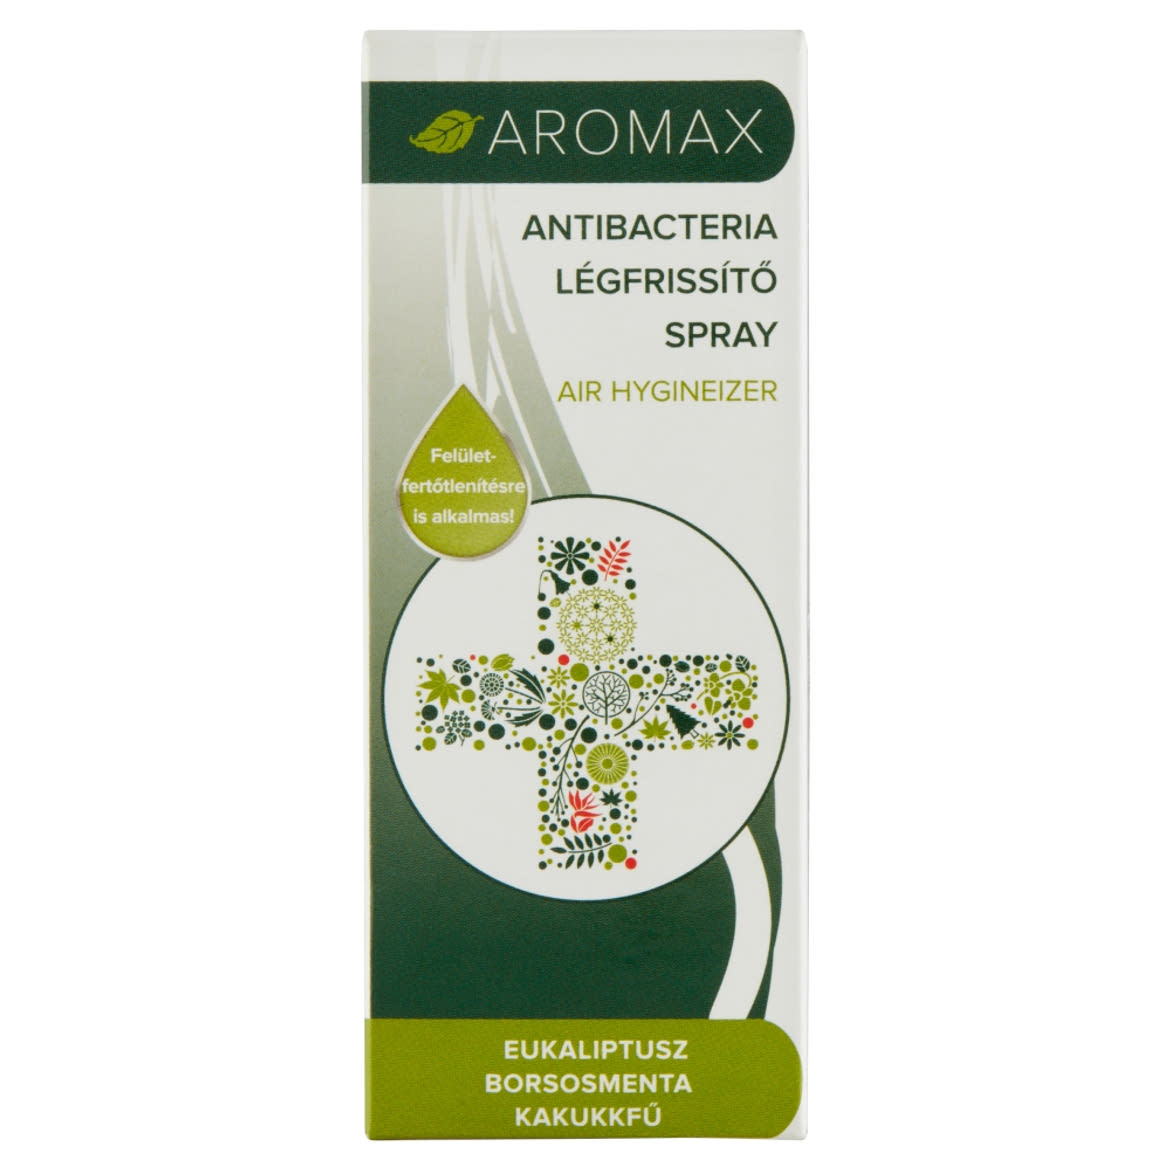 Aromax Antibacteria eukaliptusz-borsosmenta-kakukkfű légfrissítő spray